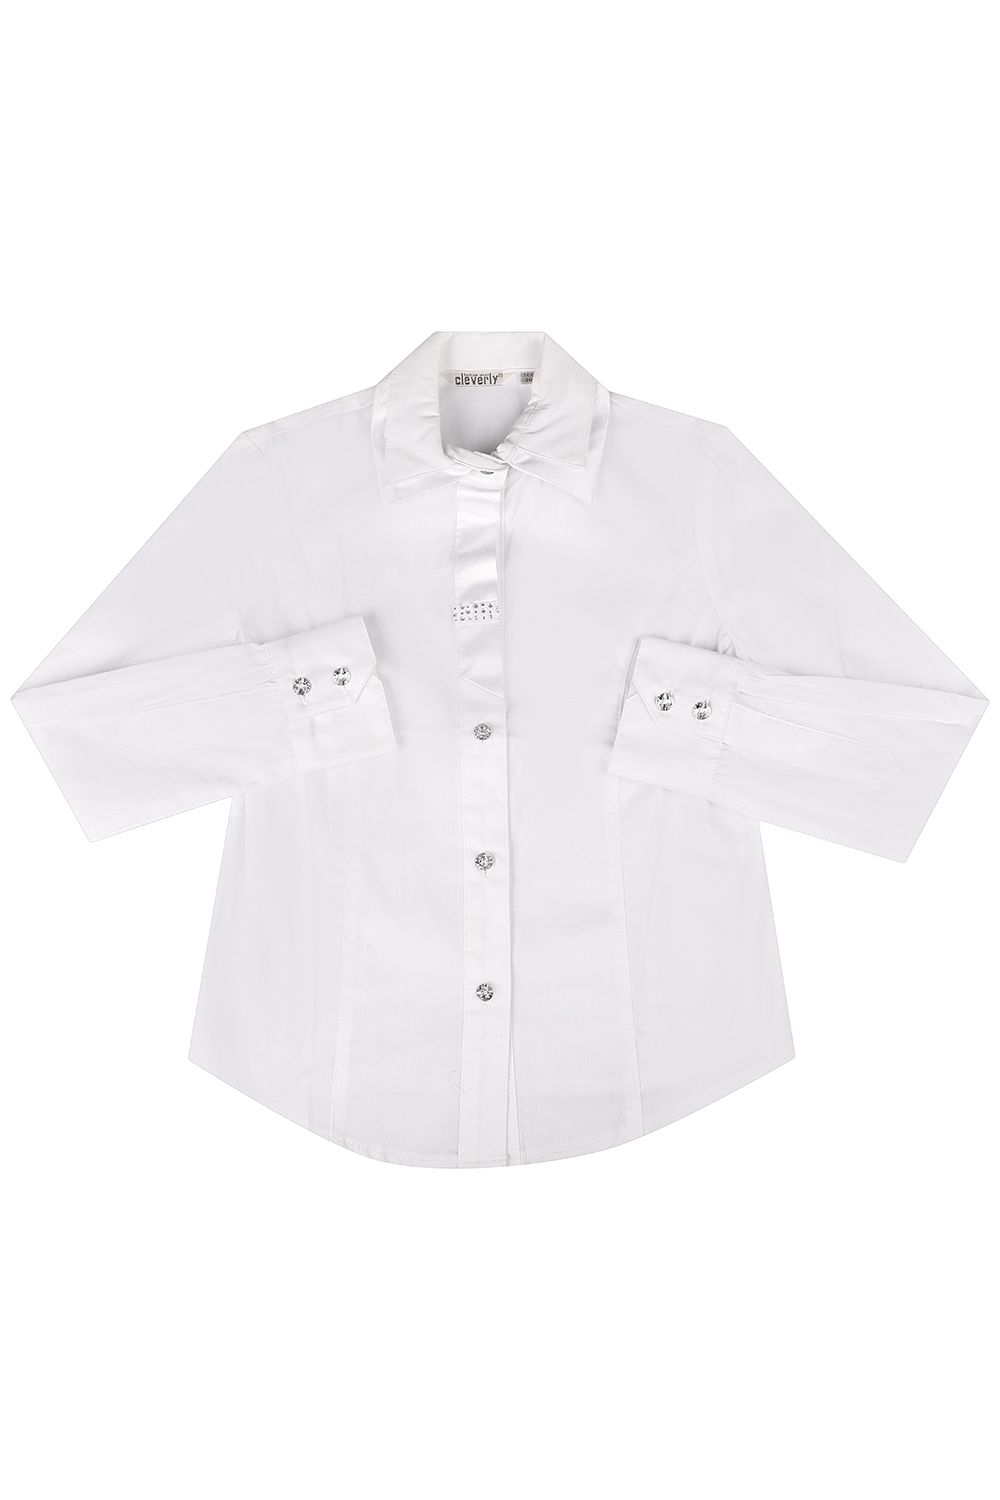 Блуза Cleverly, размер 134 (34), цвет белый - фото 1